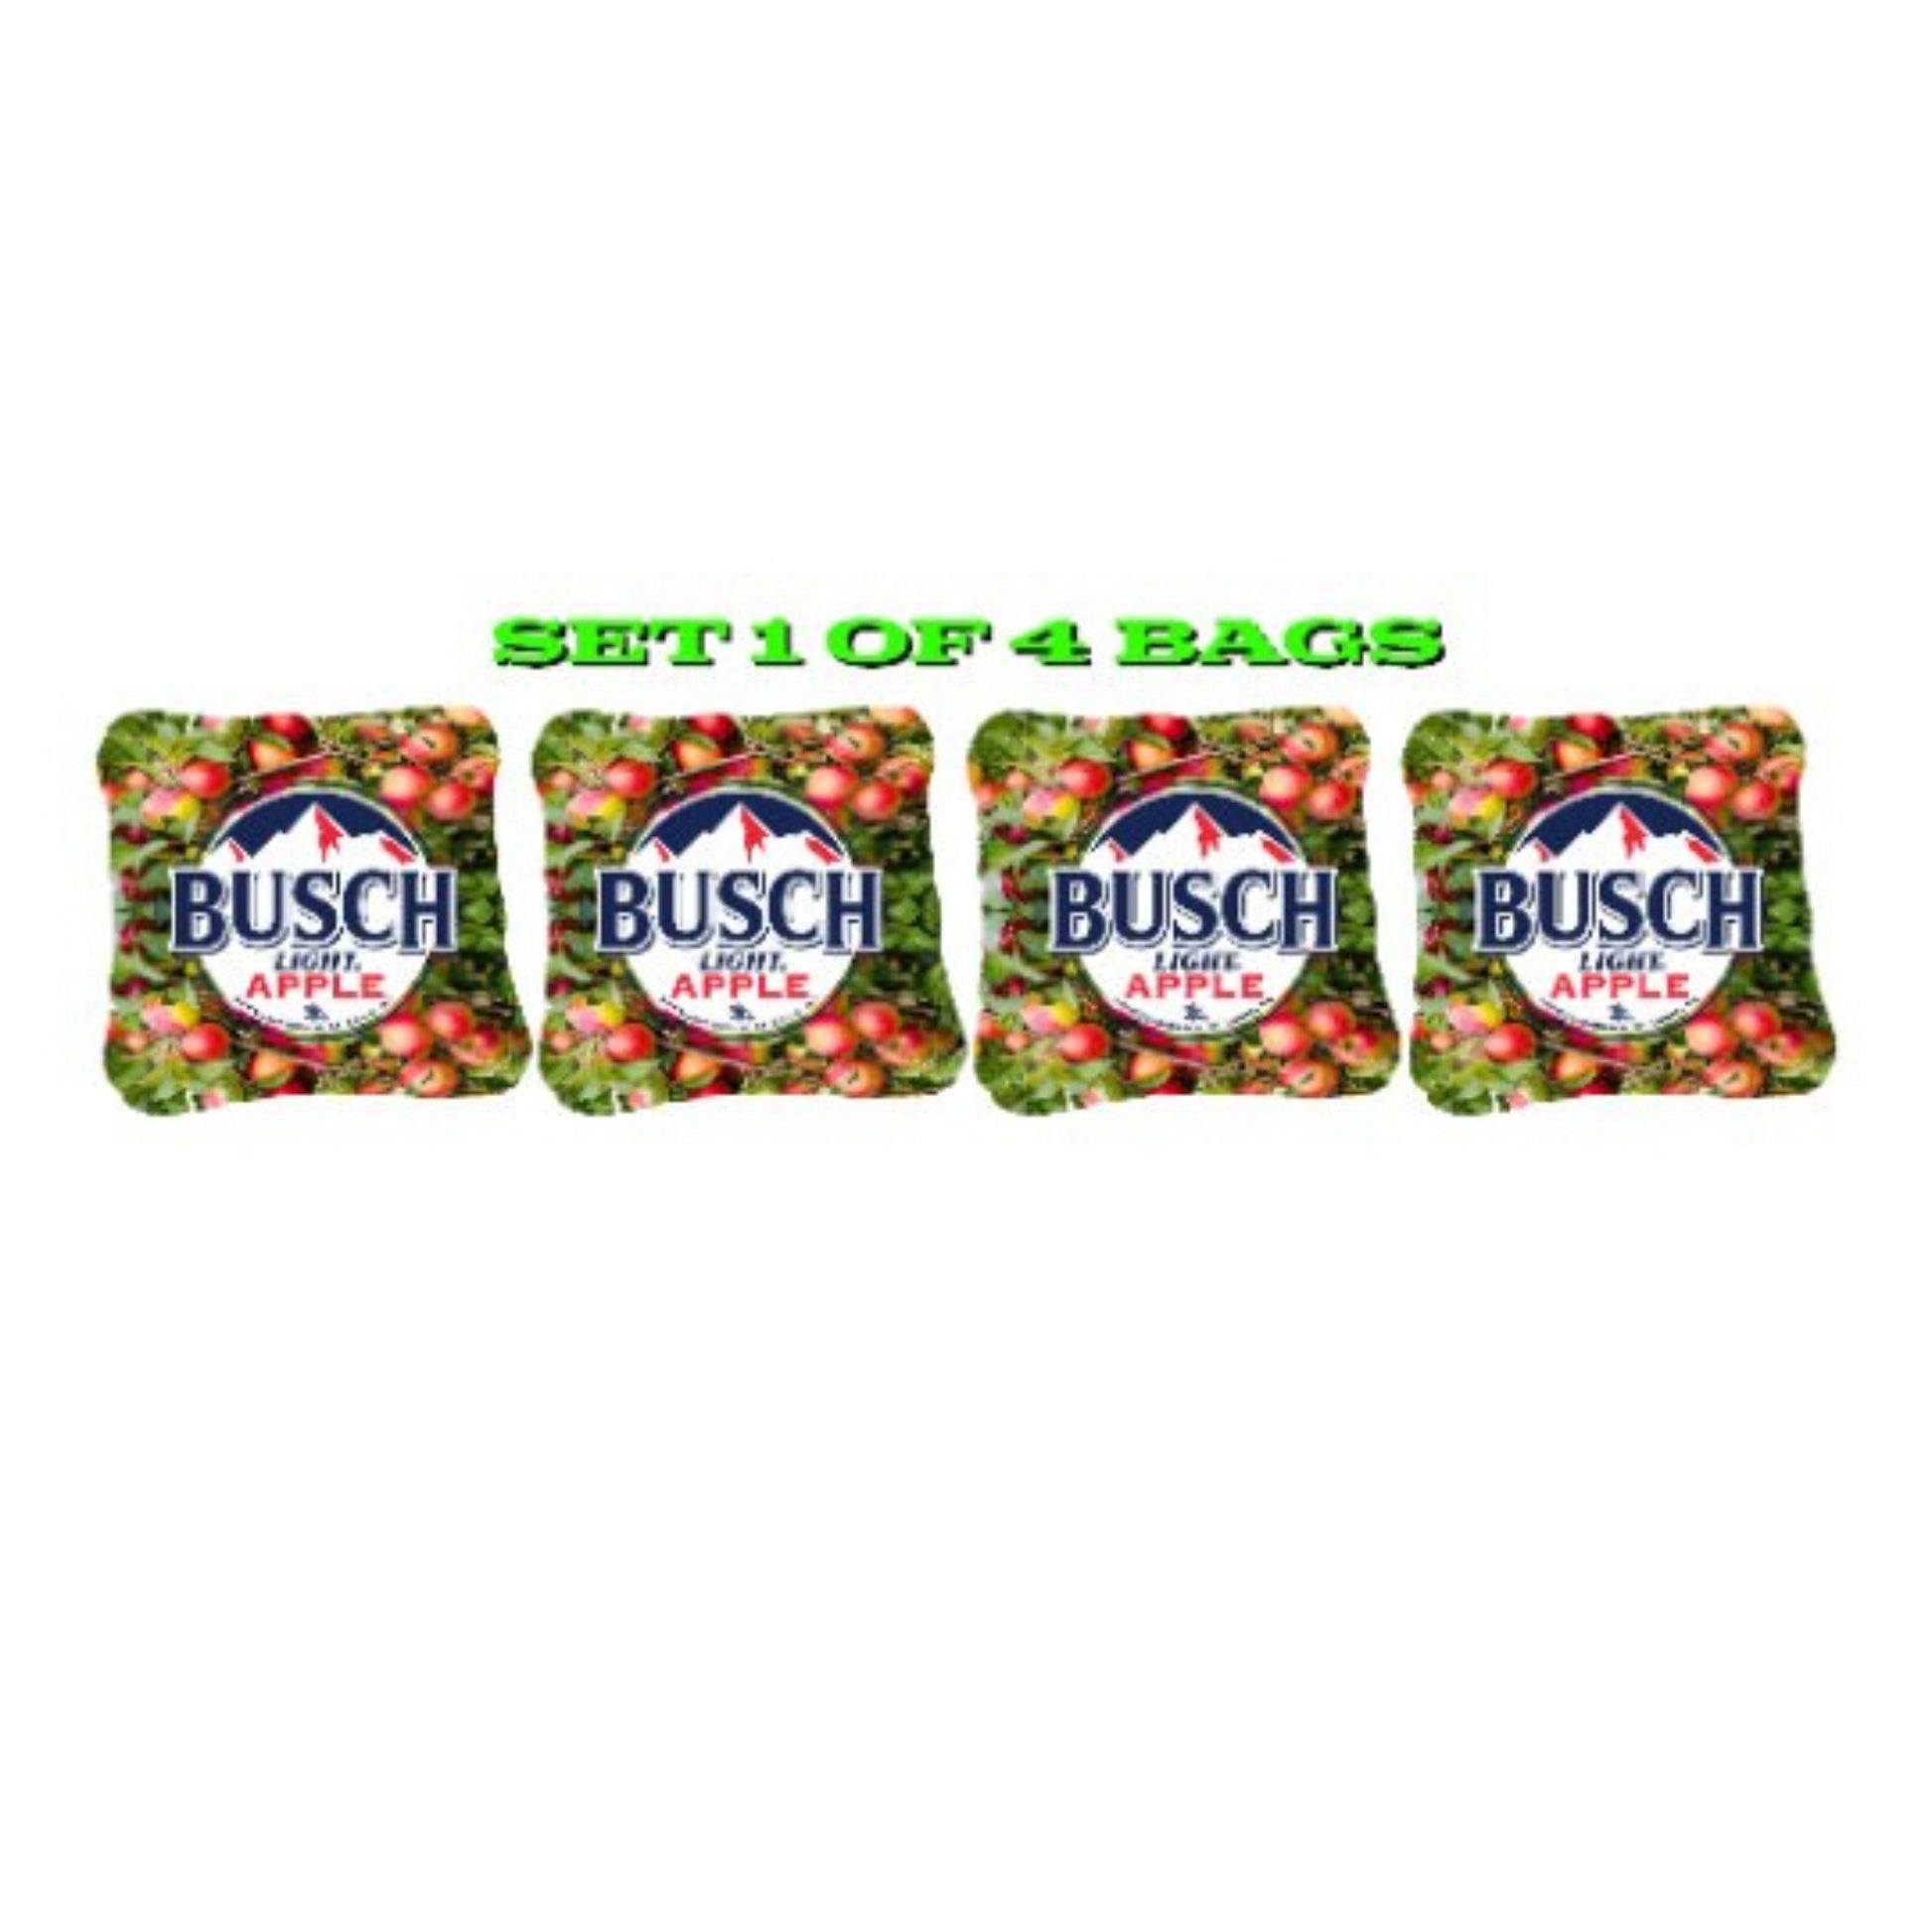 Busch Light Apple Pro Style Cornhole Bags